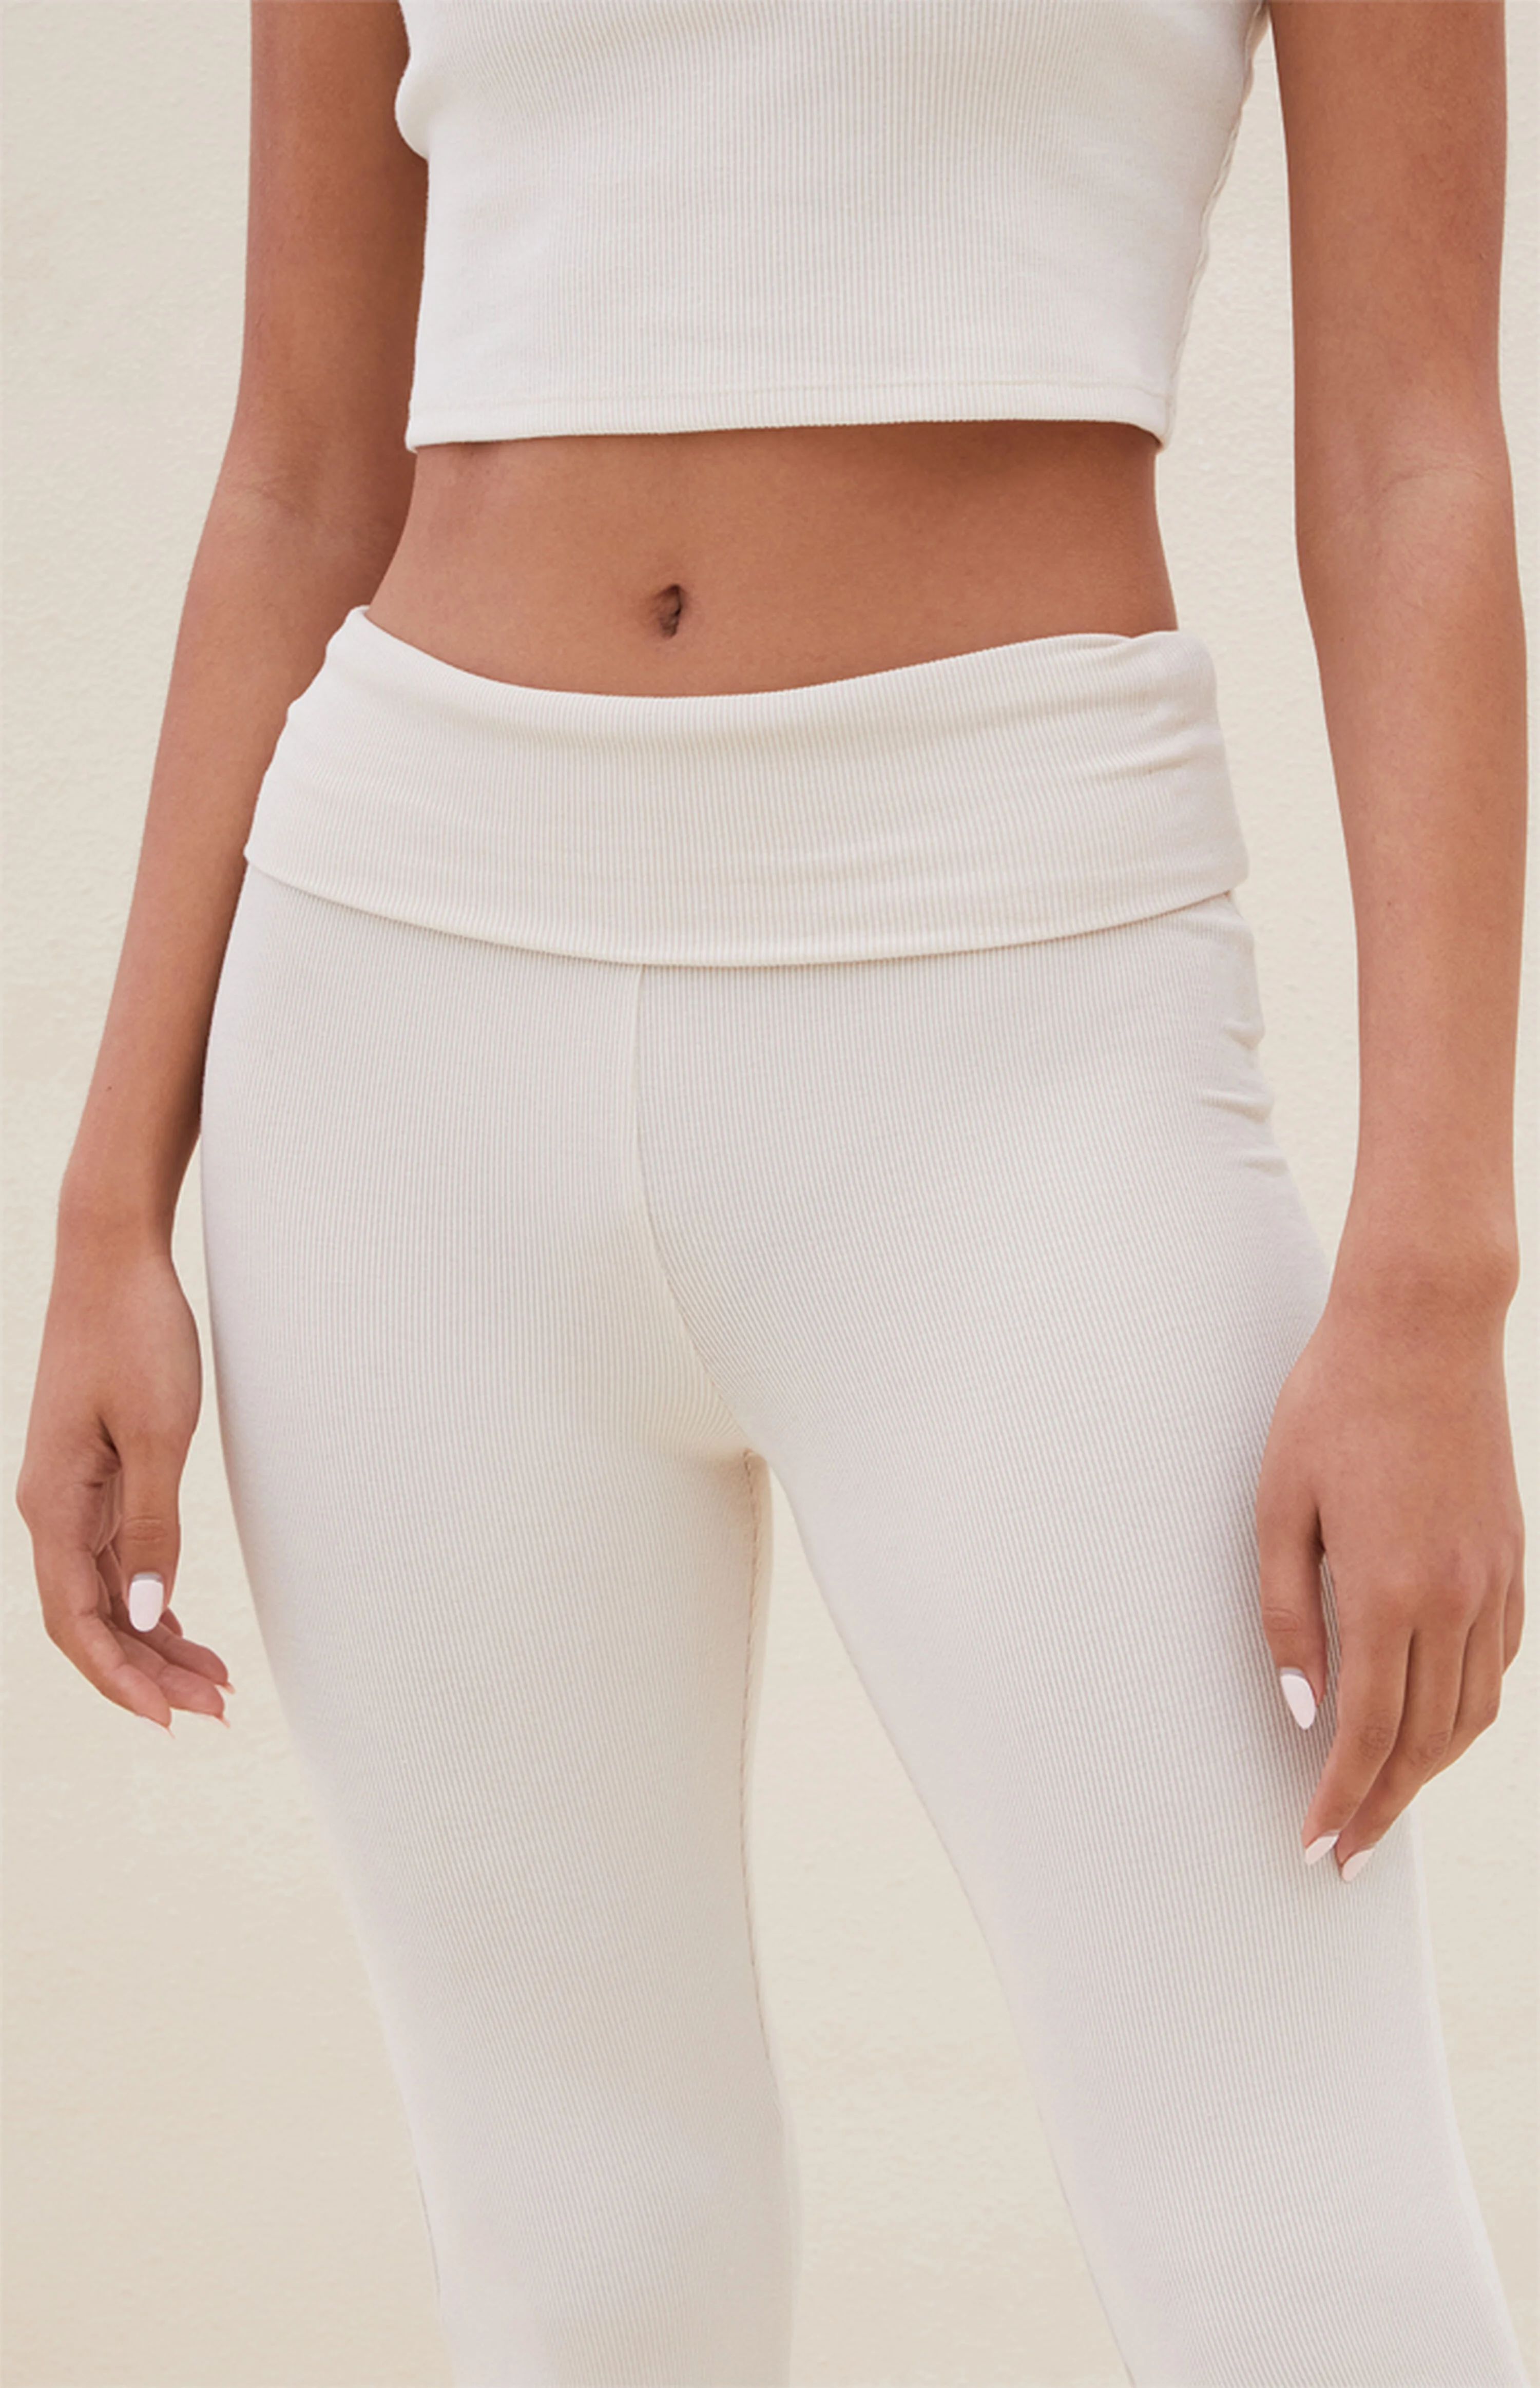 Beverly & Beck Femme Foldover Yoga Pants | PacSun